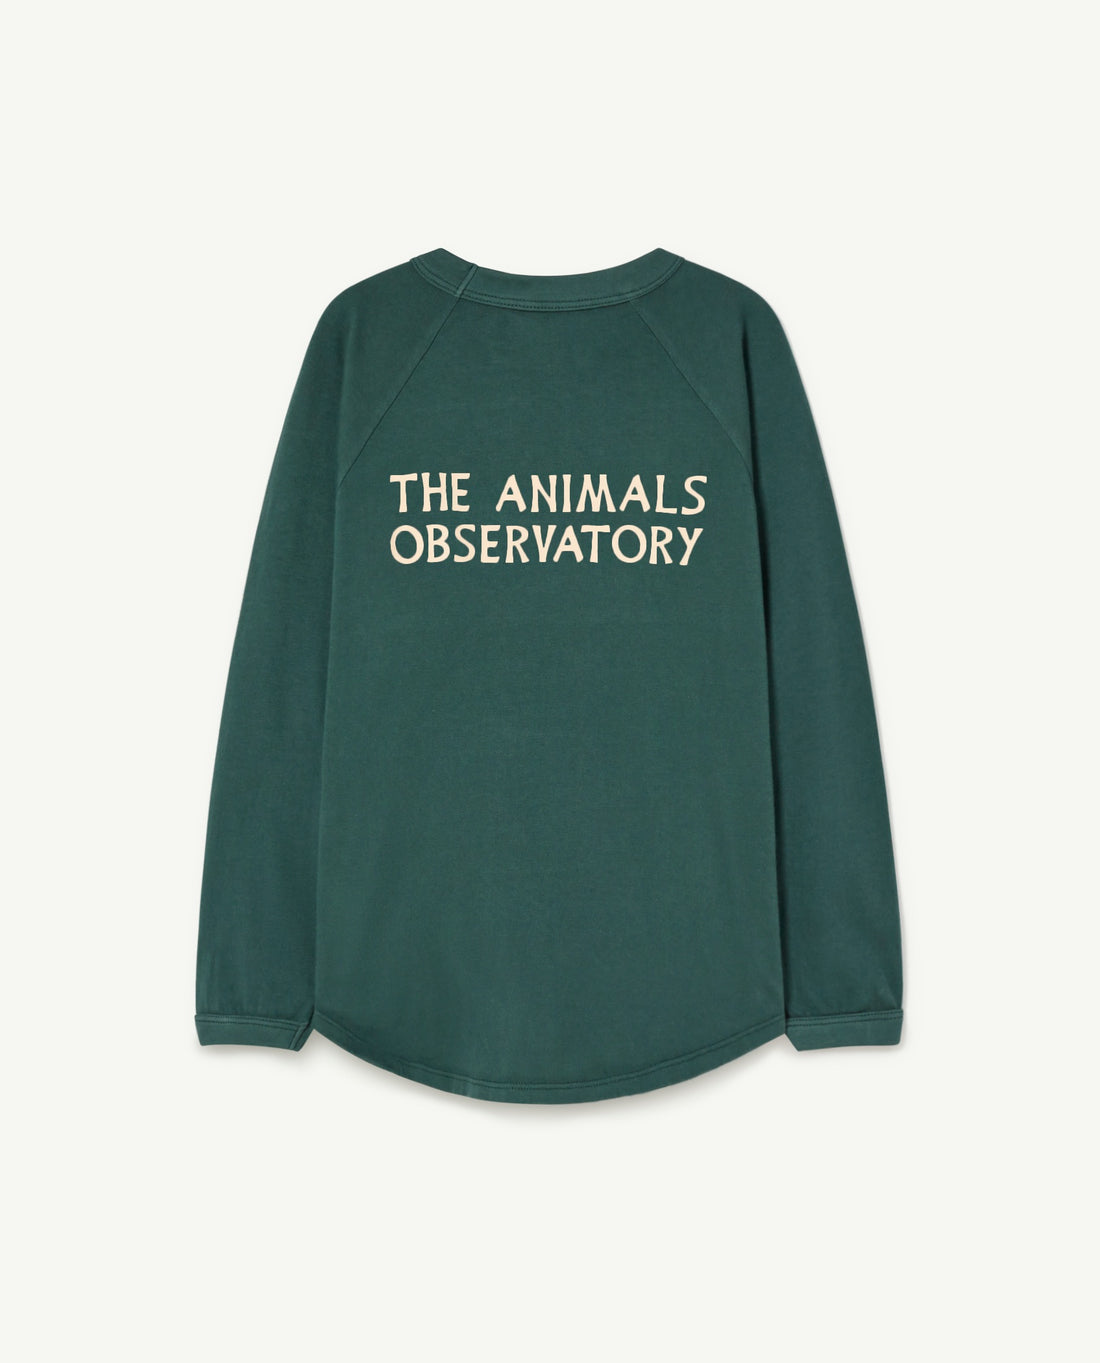 The animals observatory - Anteater kids t-shirt - Dark green